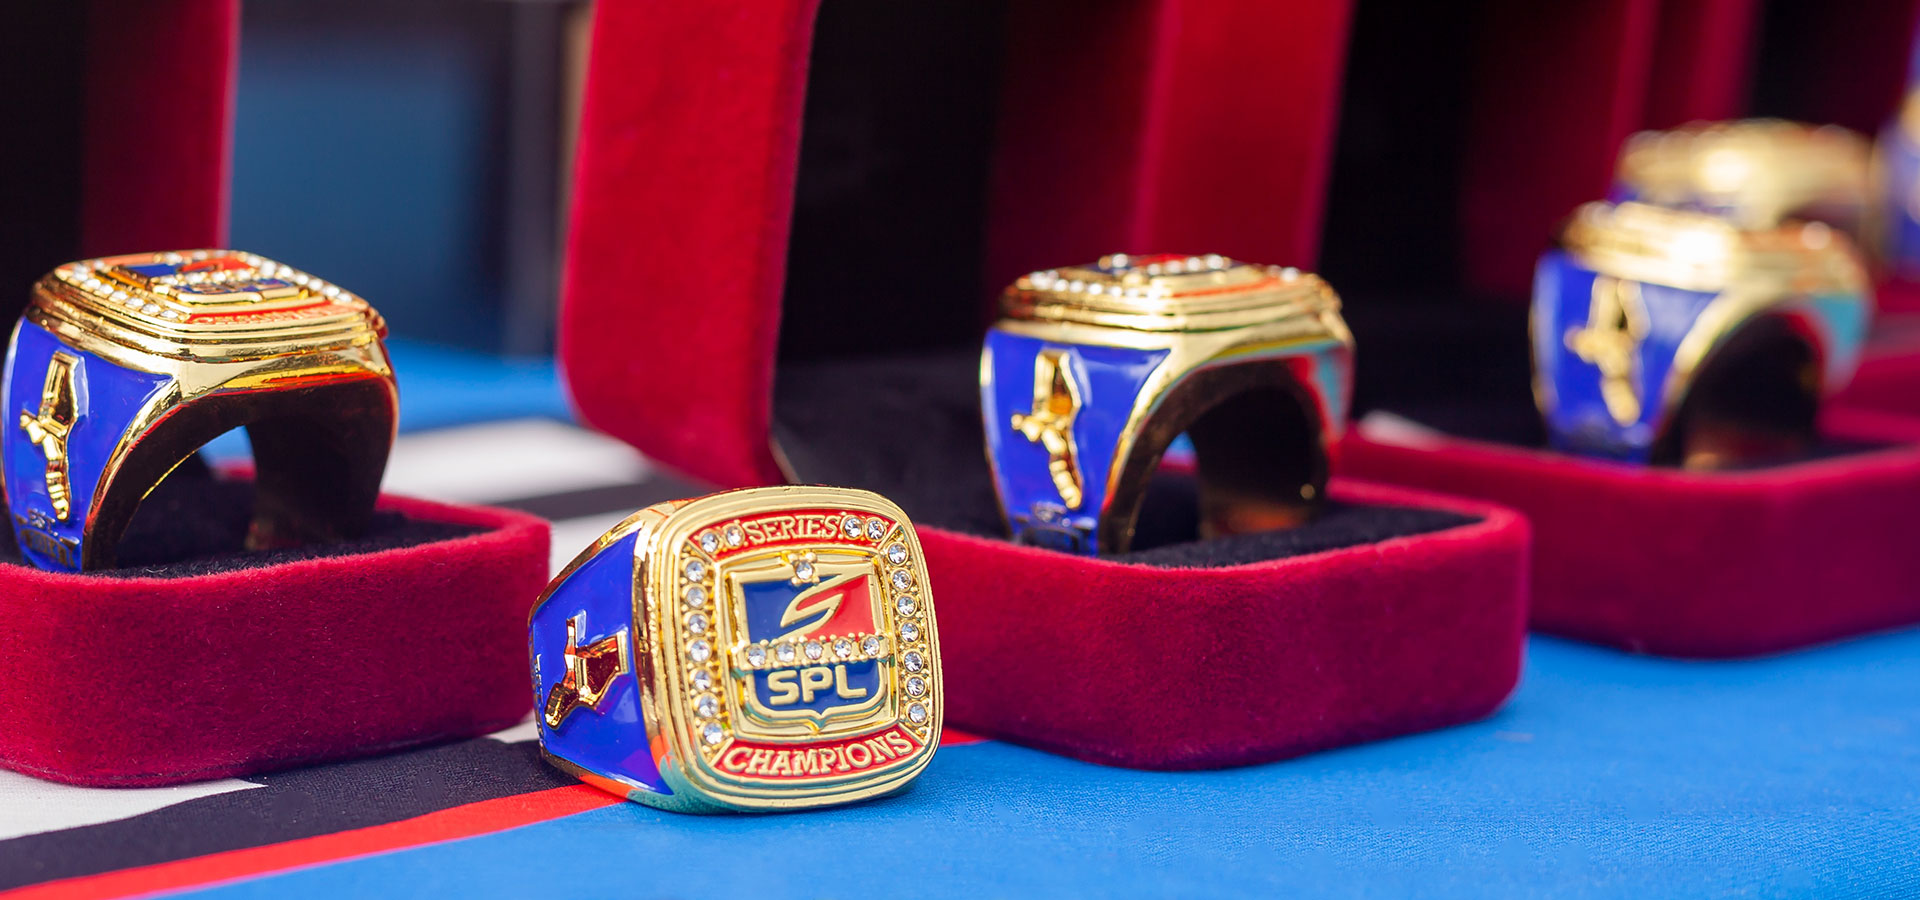 SPL Series Championship Rings